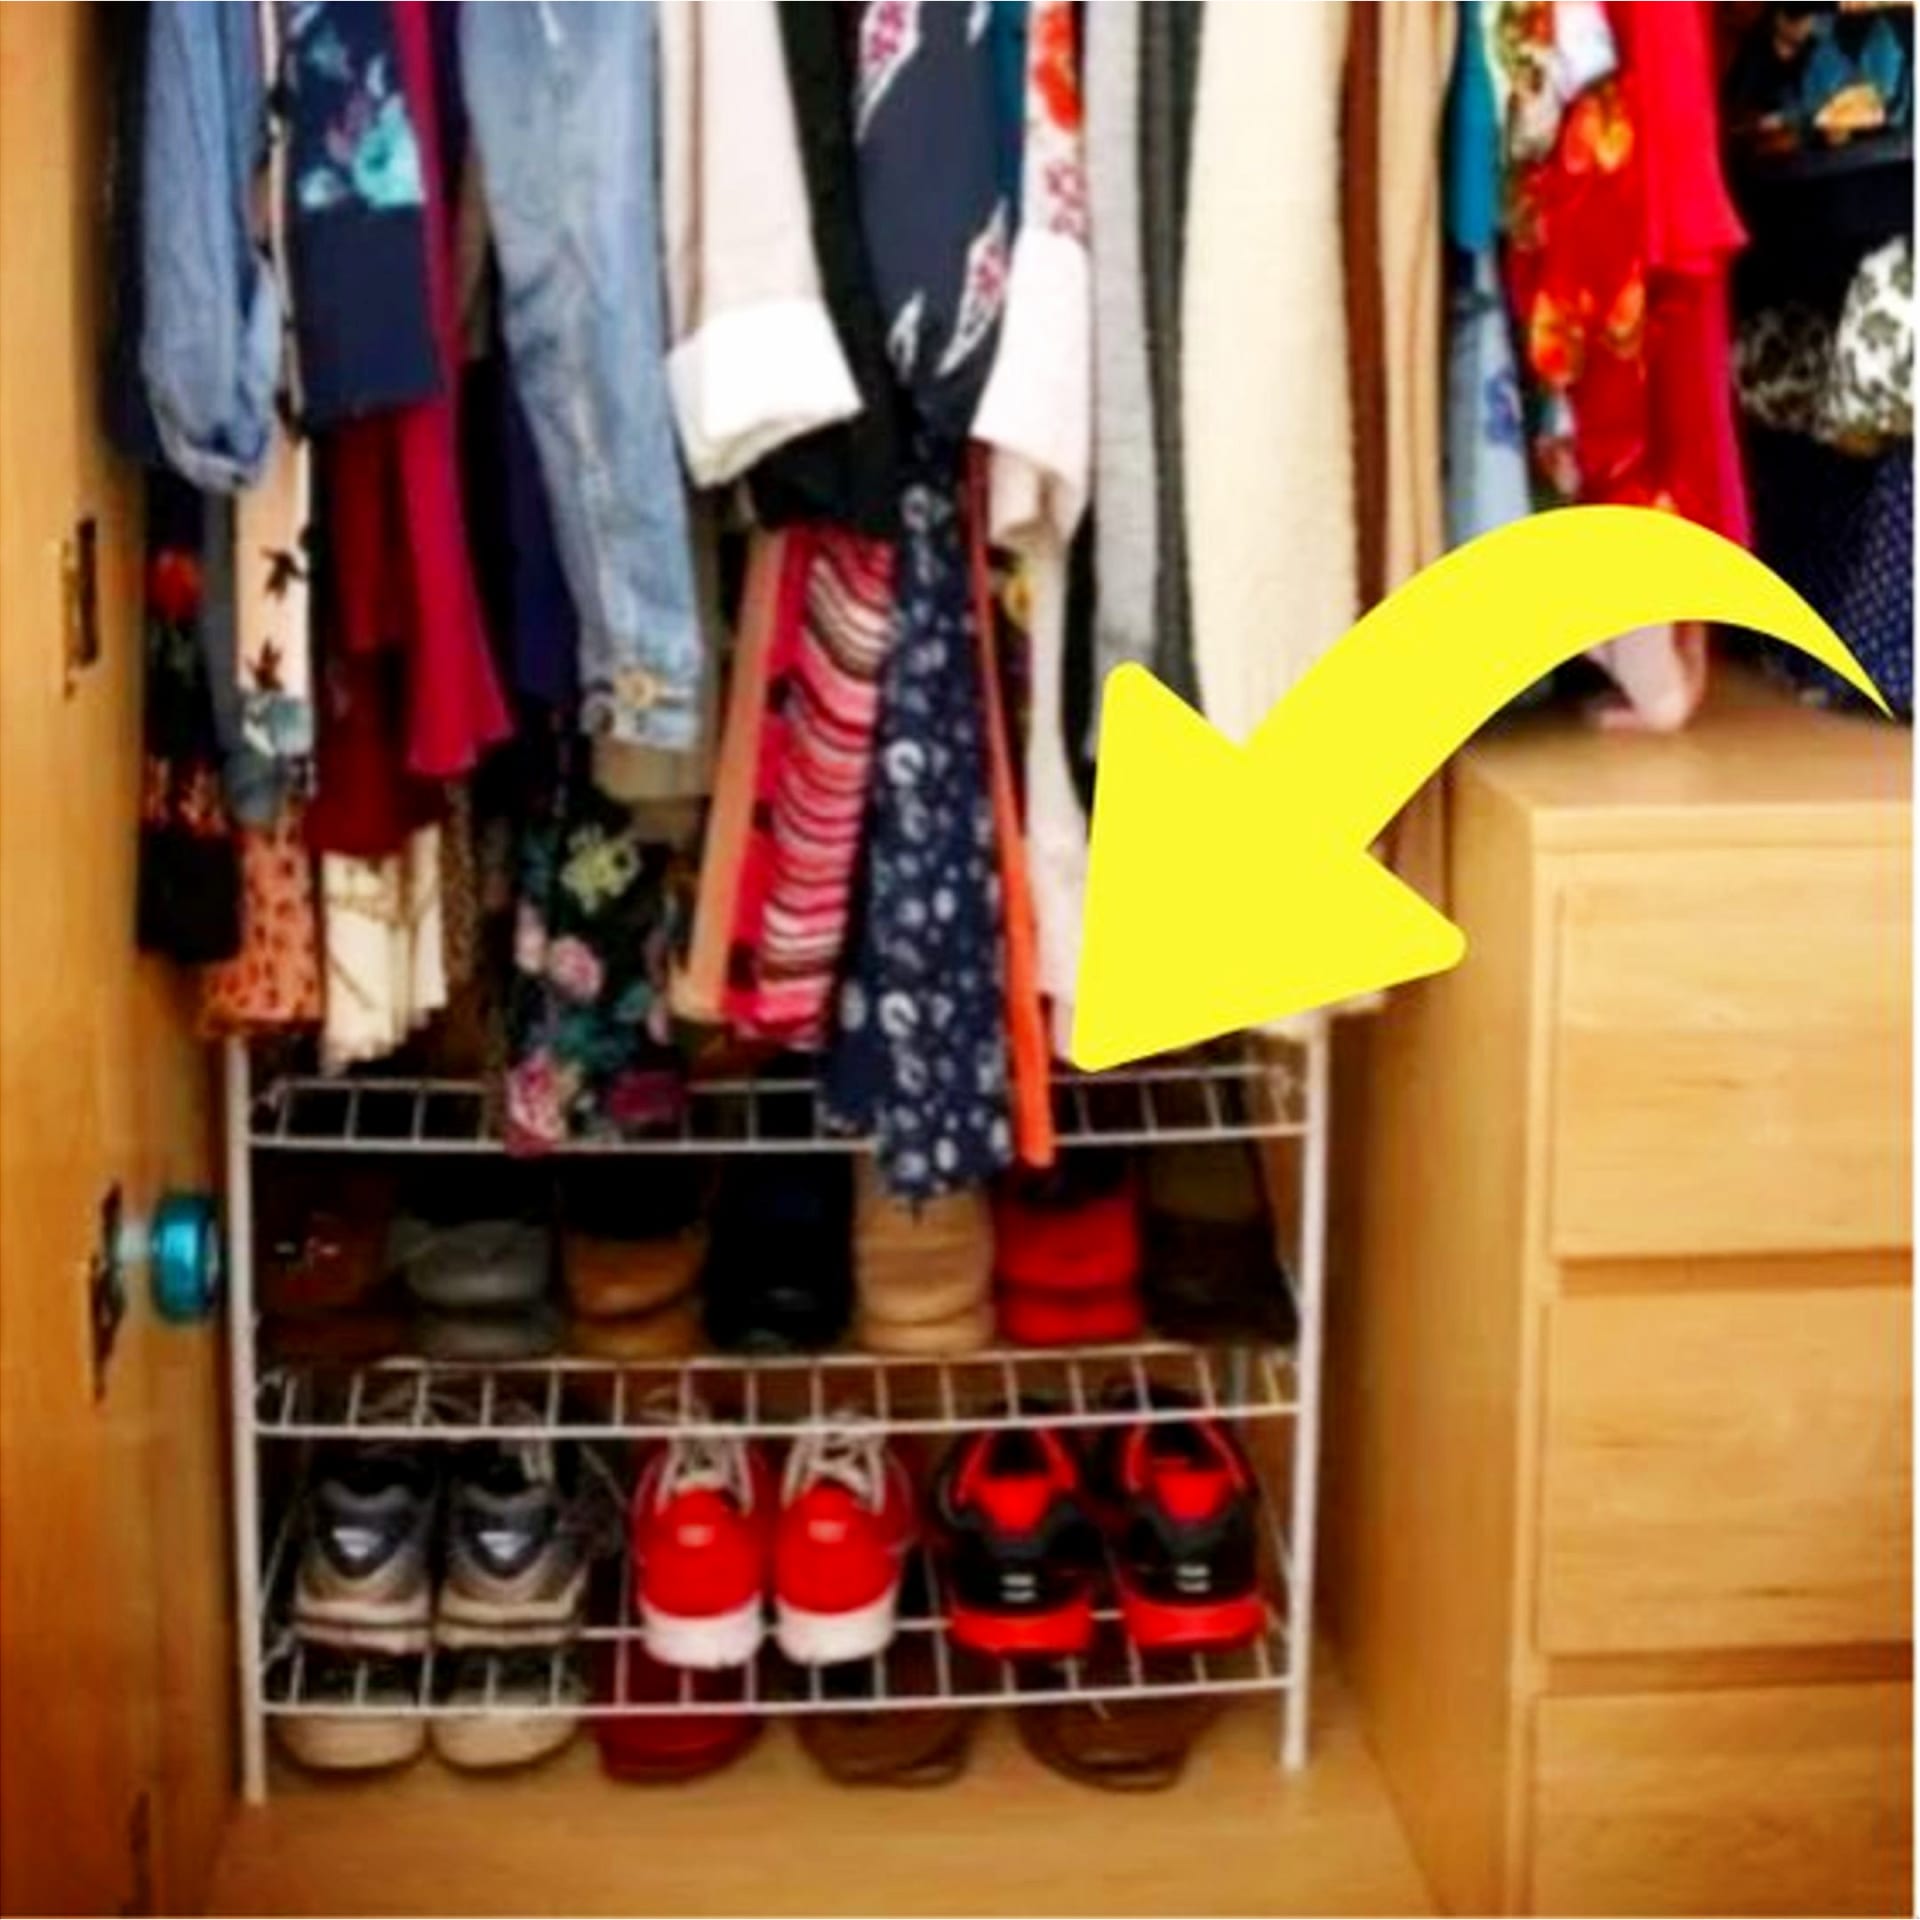 college dorm room organization ideas - dorm closet organization hacks to make more storage space